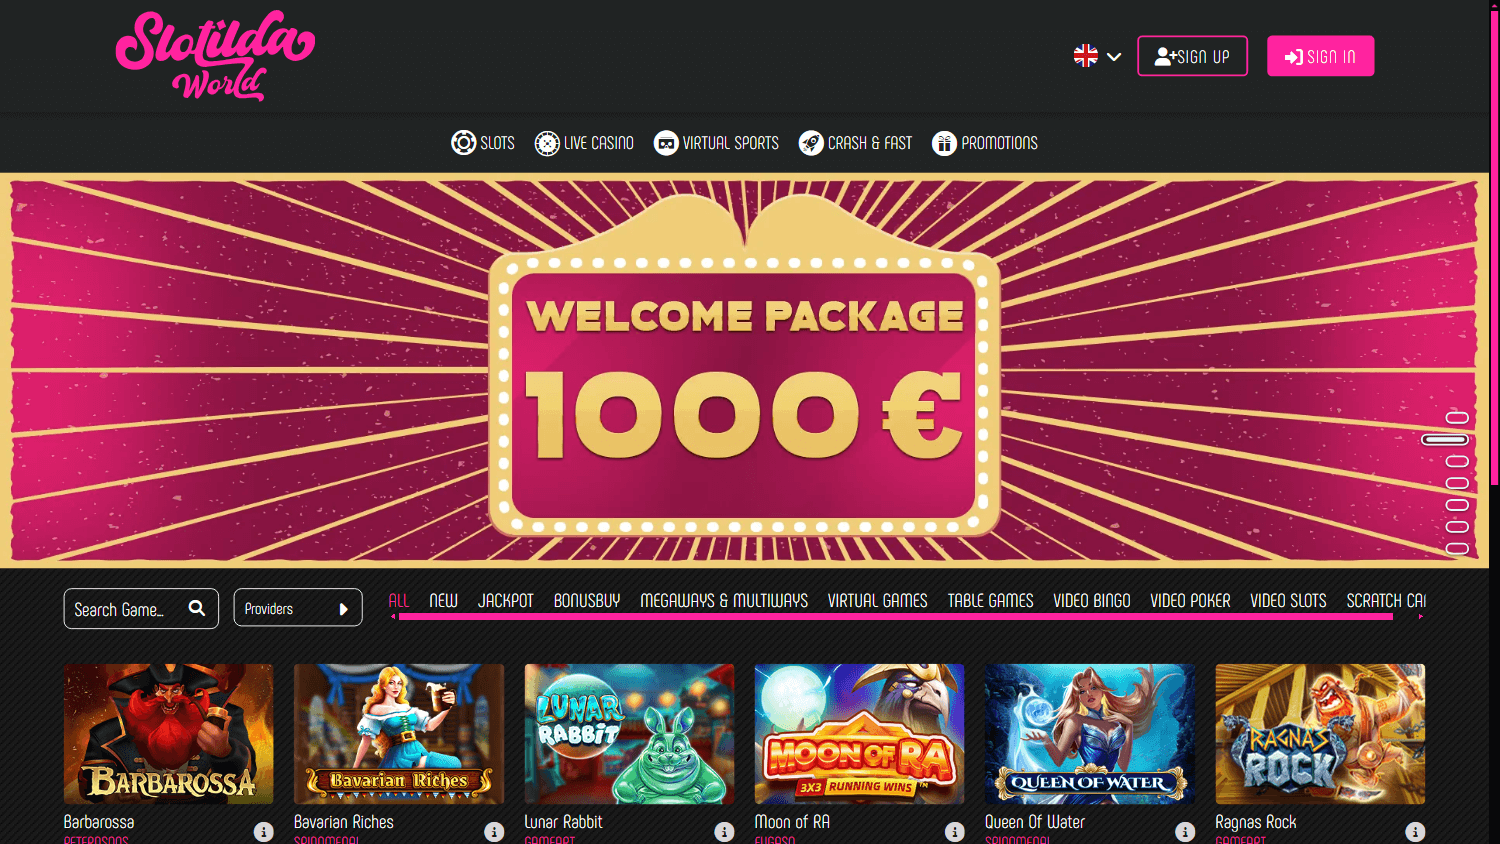 slotilda_world_casino_homepage_desktop